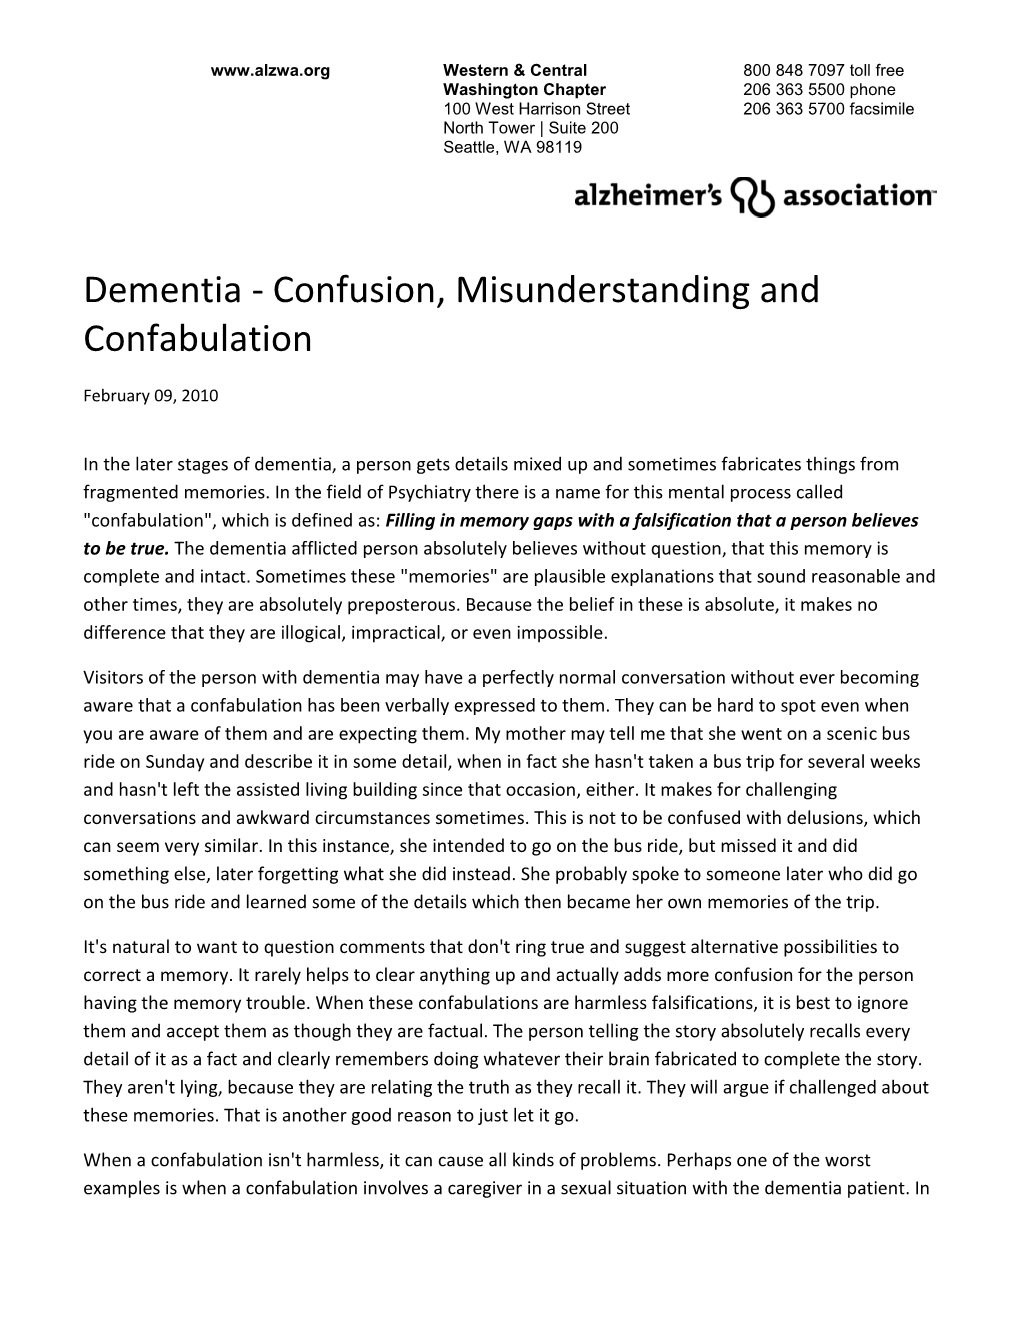 Dementia - Confusion, Misunderstanding and Confabulation